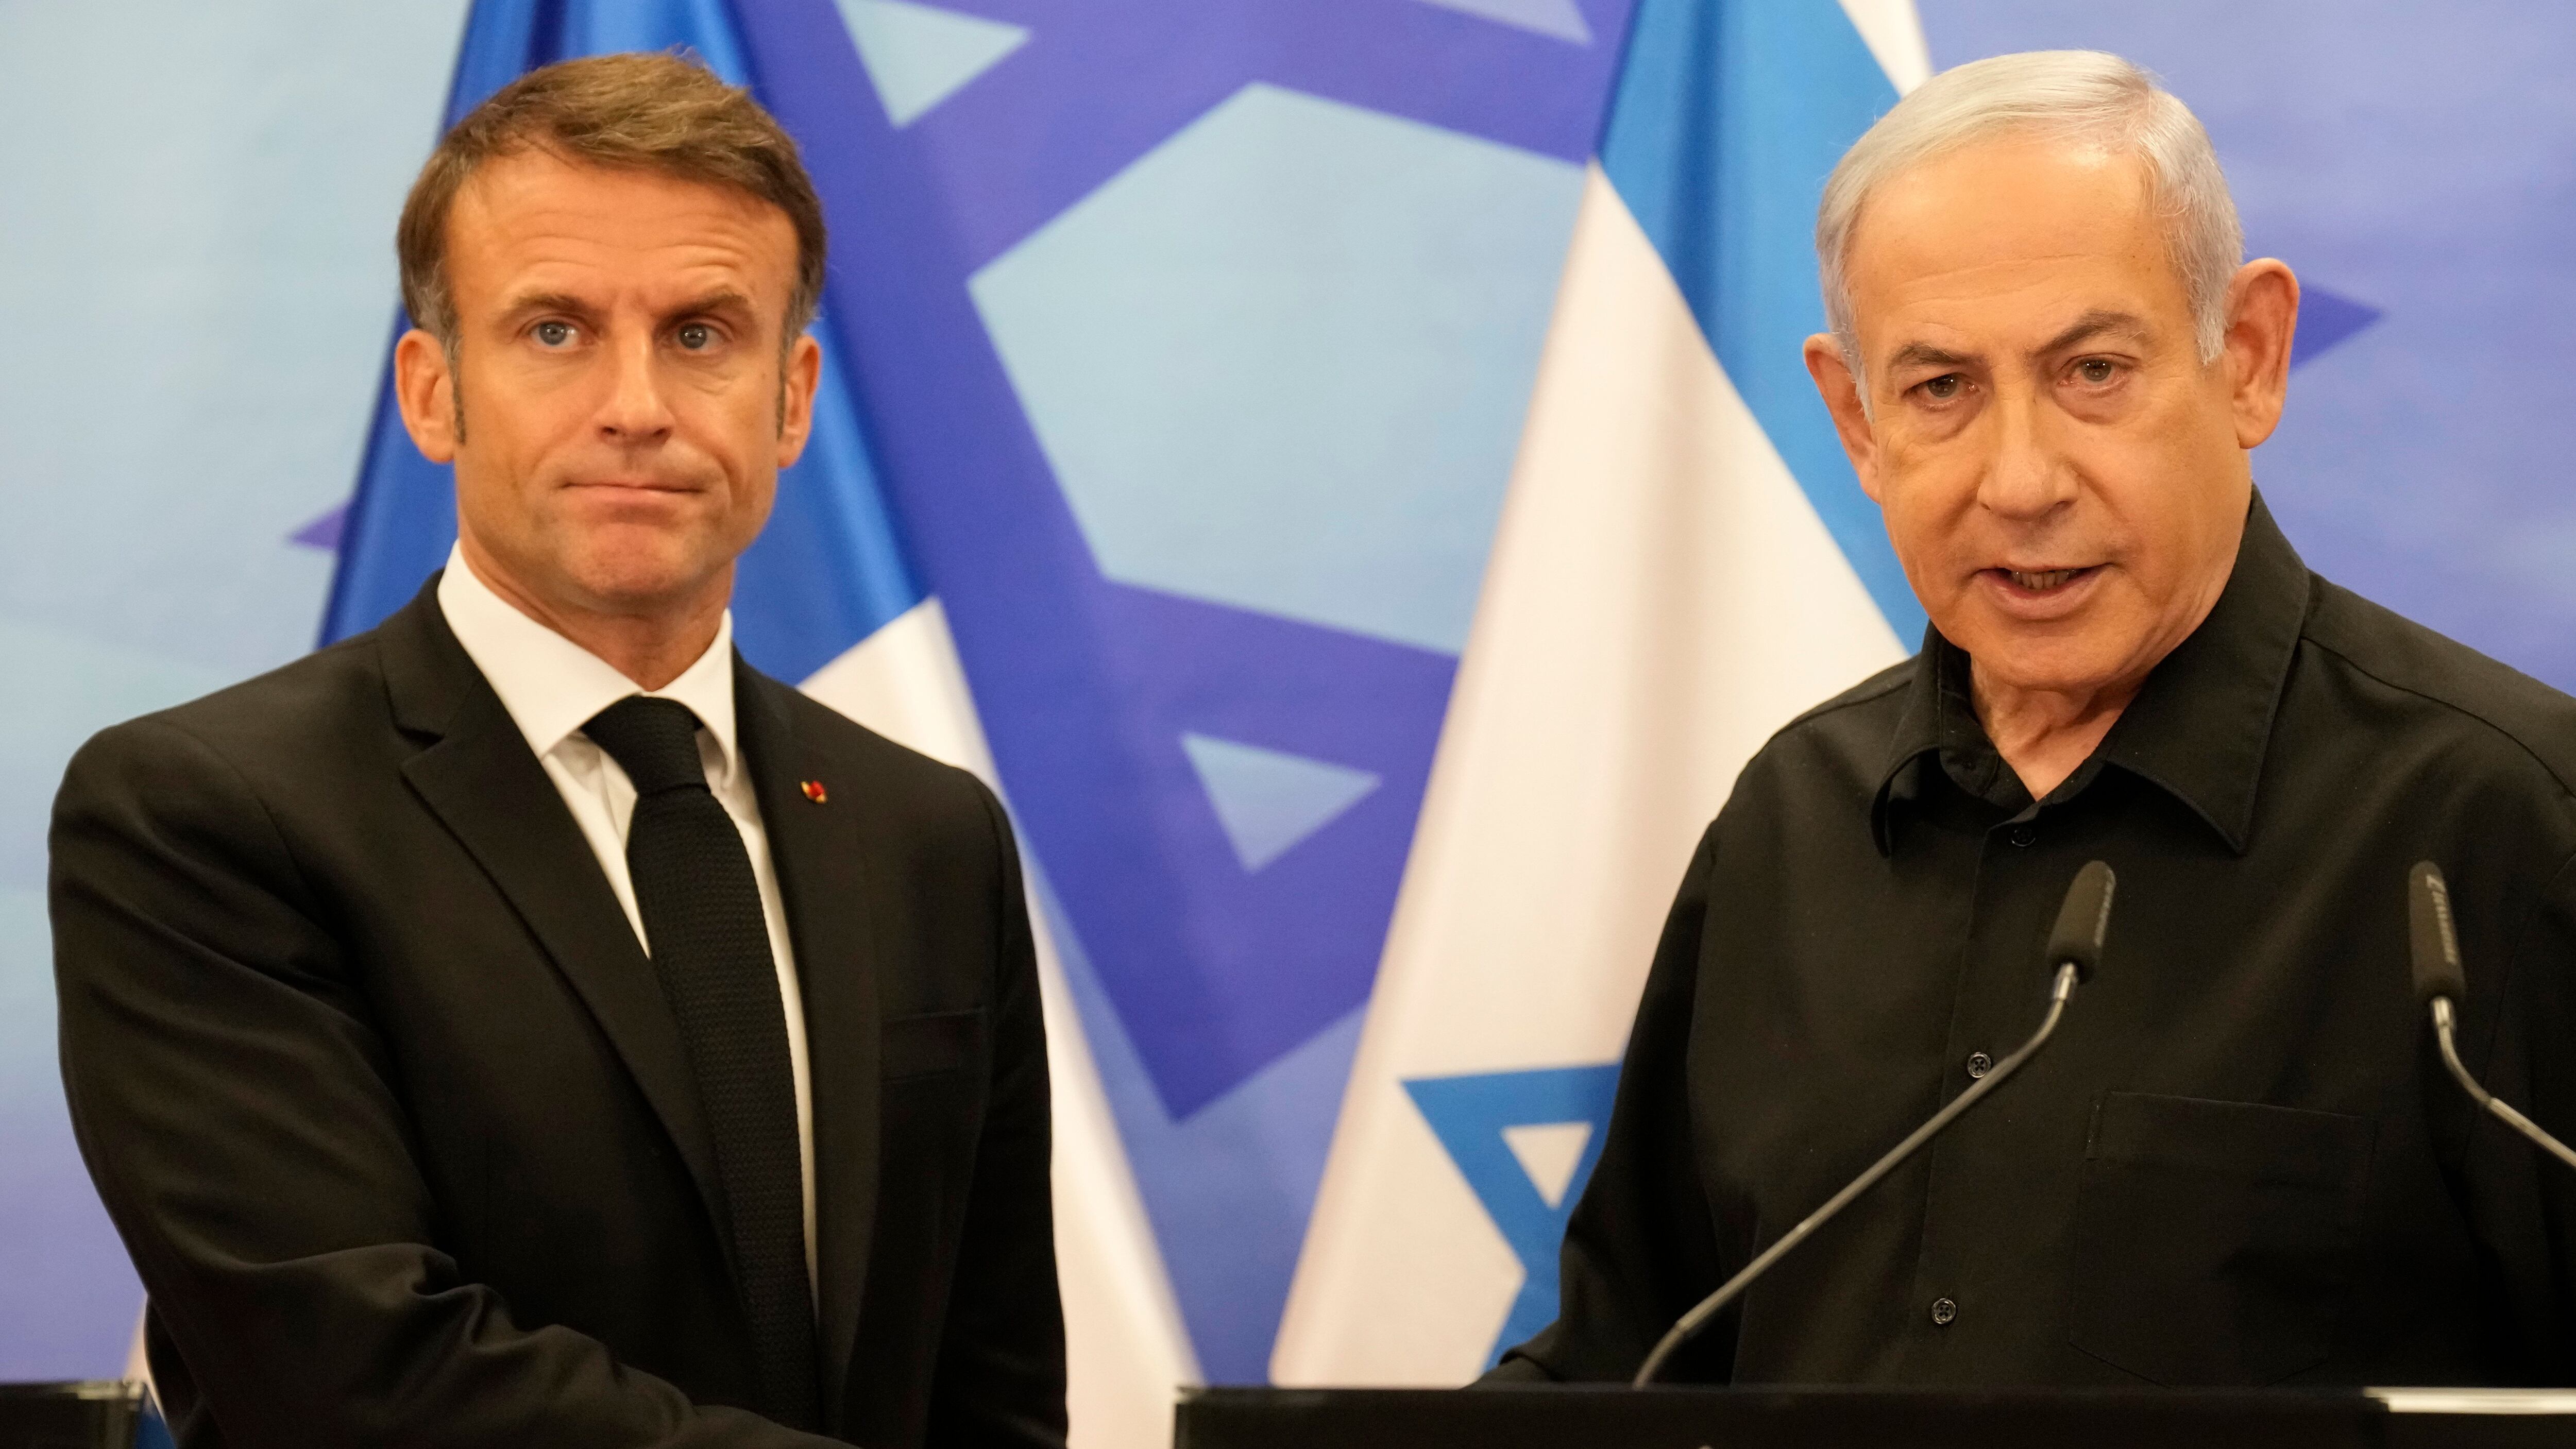 El presidente francés, Emmanuel Macron, y el primer ministro israelí, Benjamin Netanyahu. EFE/EPA/CHRISTOPHE ENA / POOL MAXPPP OUT